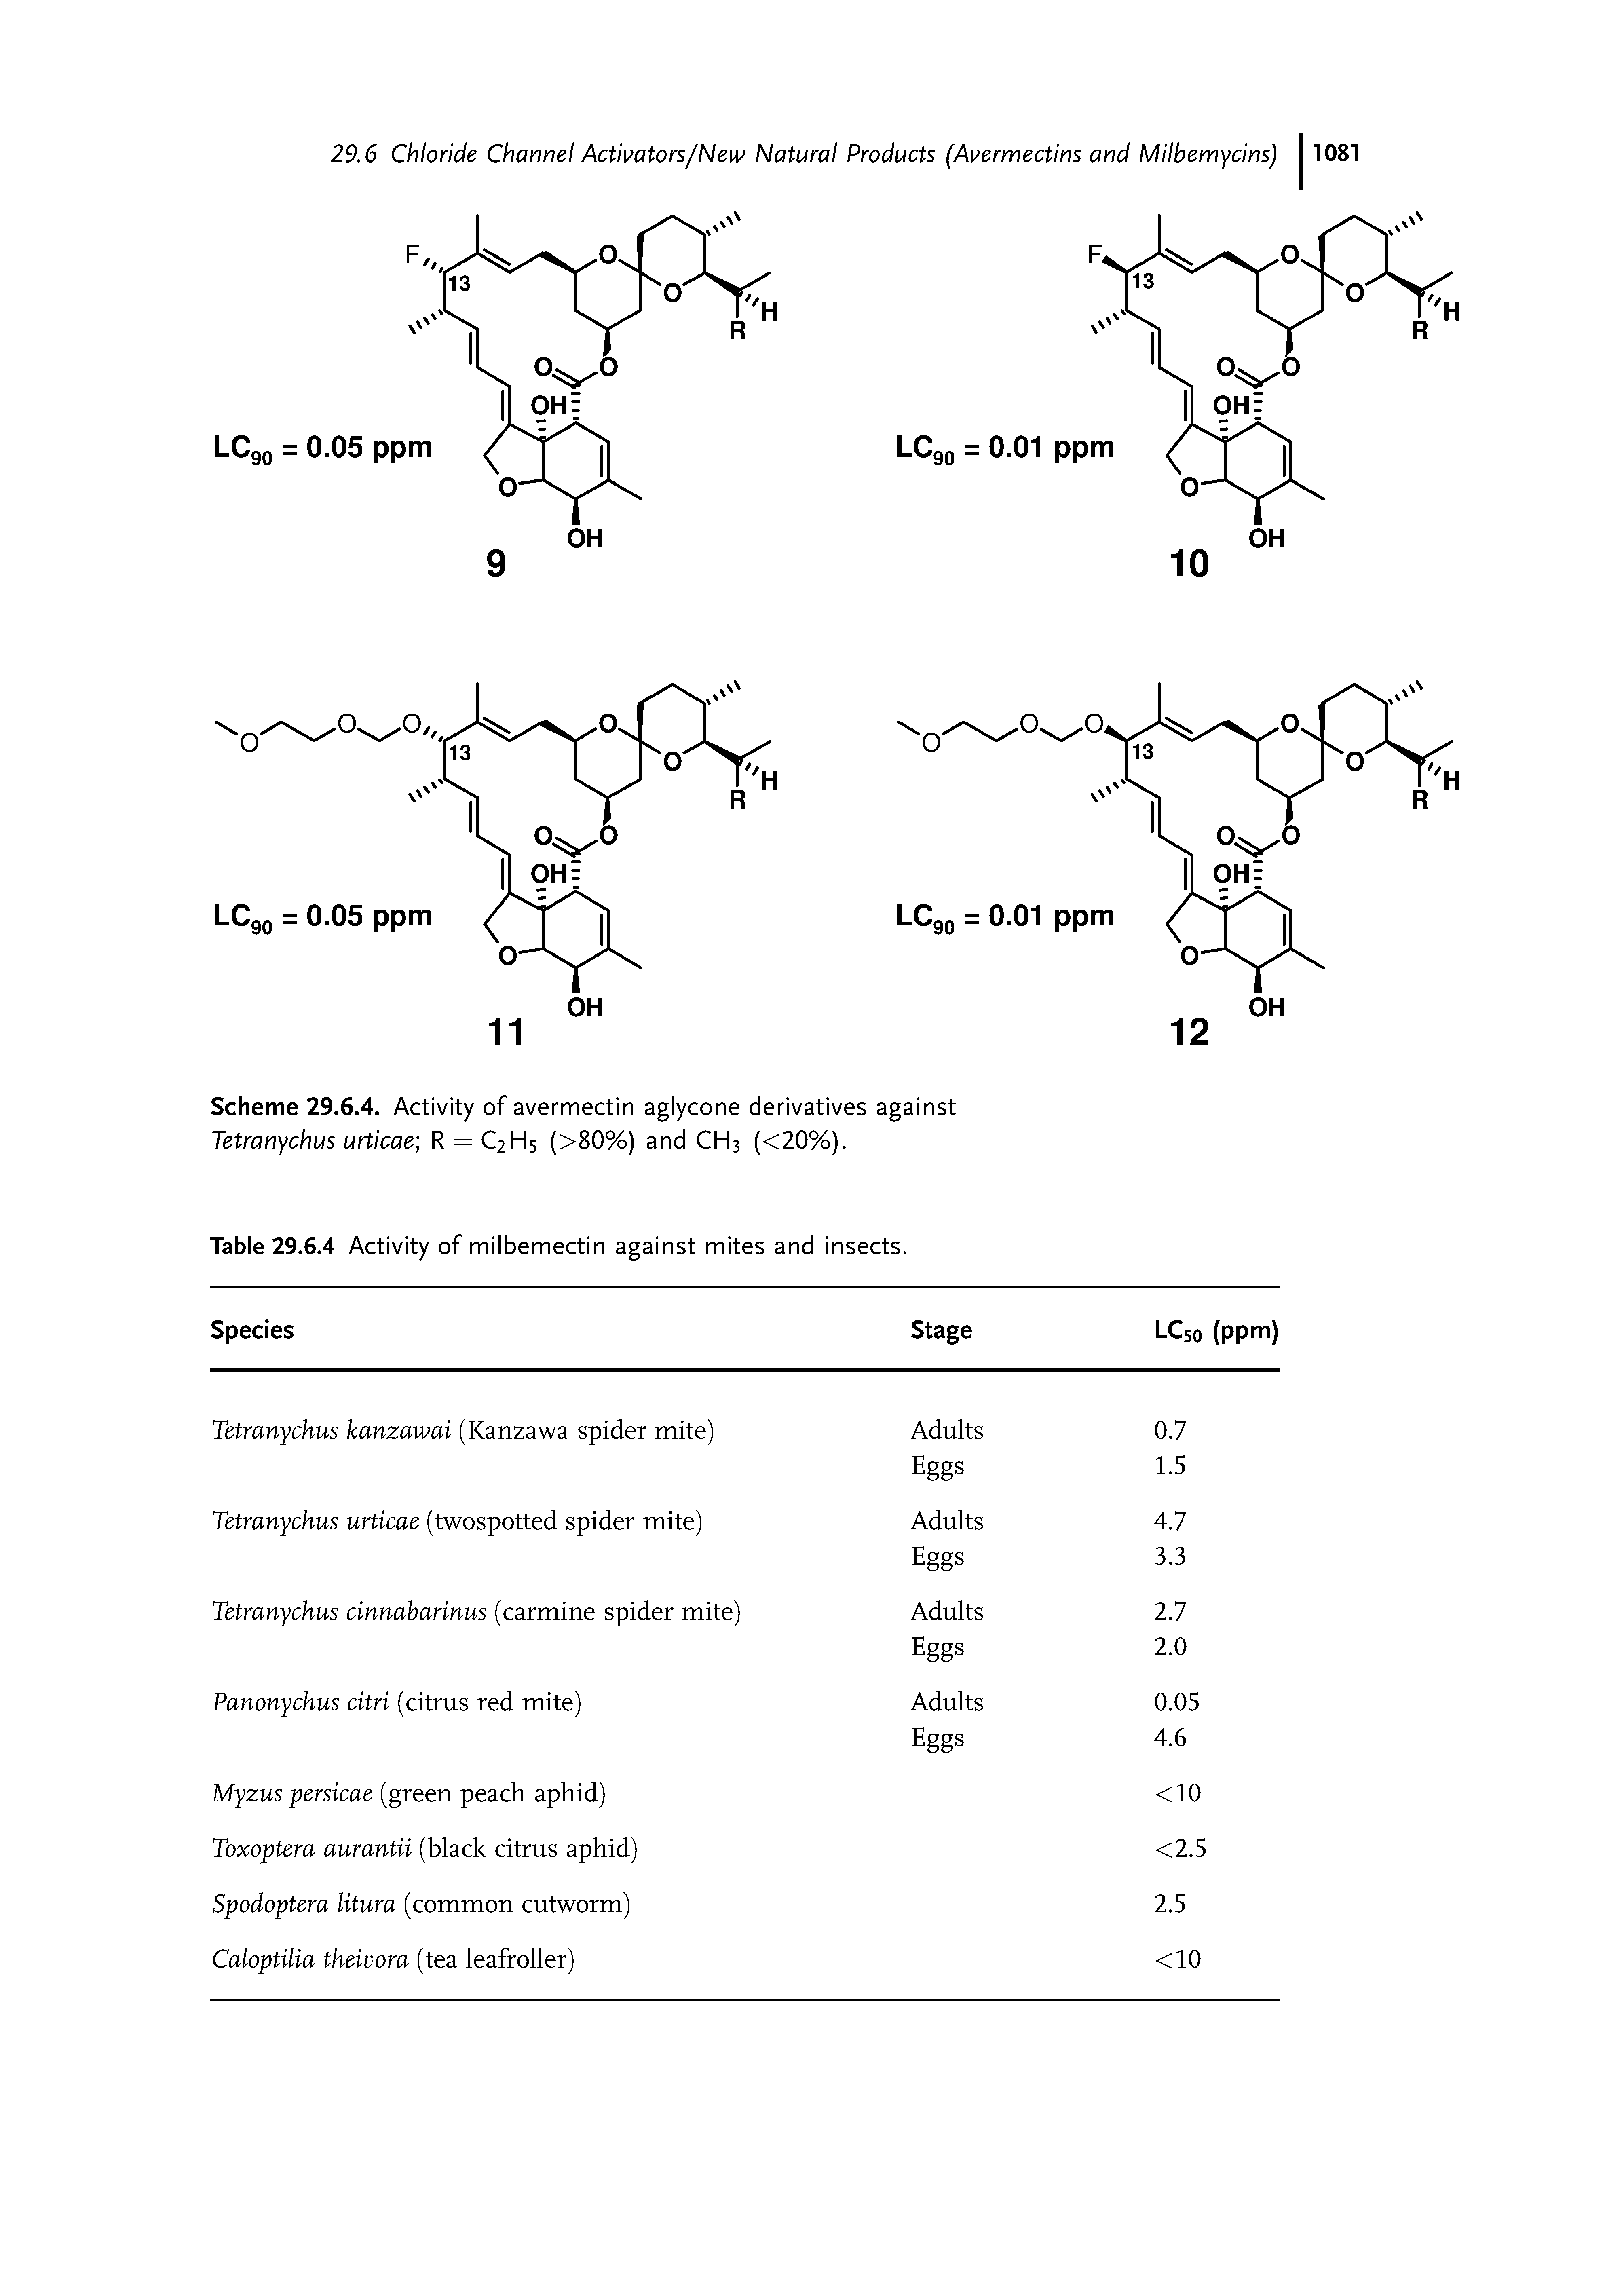 Scheme 29.6.4. Activity of avermectin aglycone derivatives against Tetranychus urticae R = C2H5 (>80%) and CH3 (<20%).